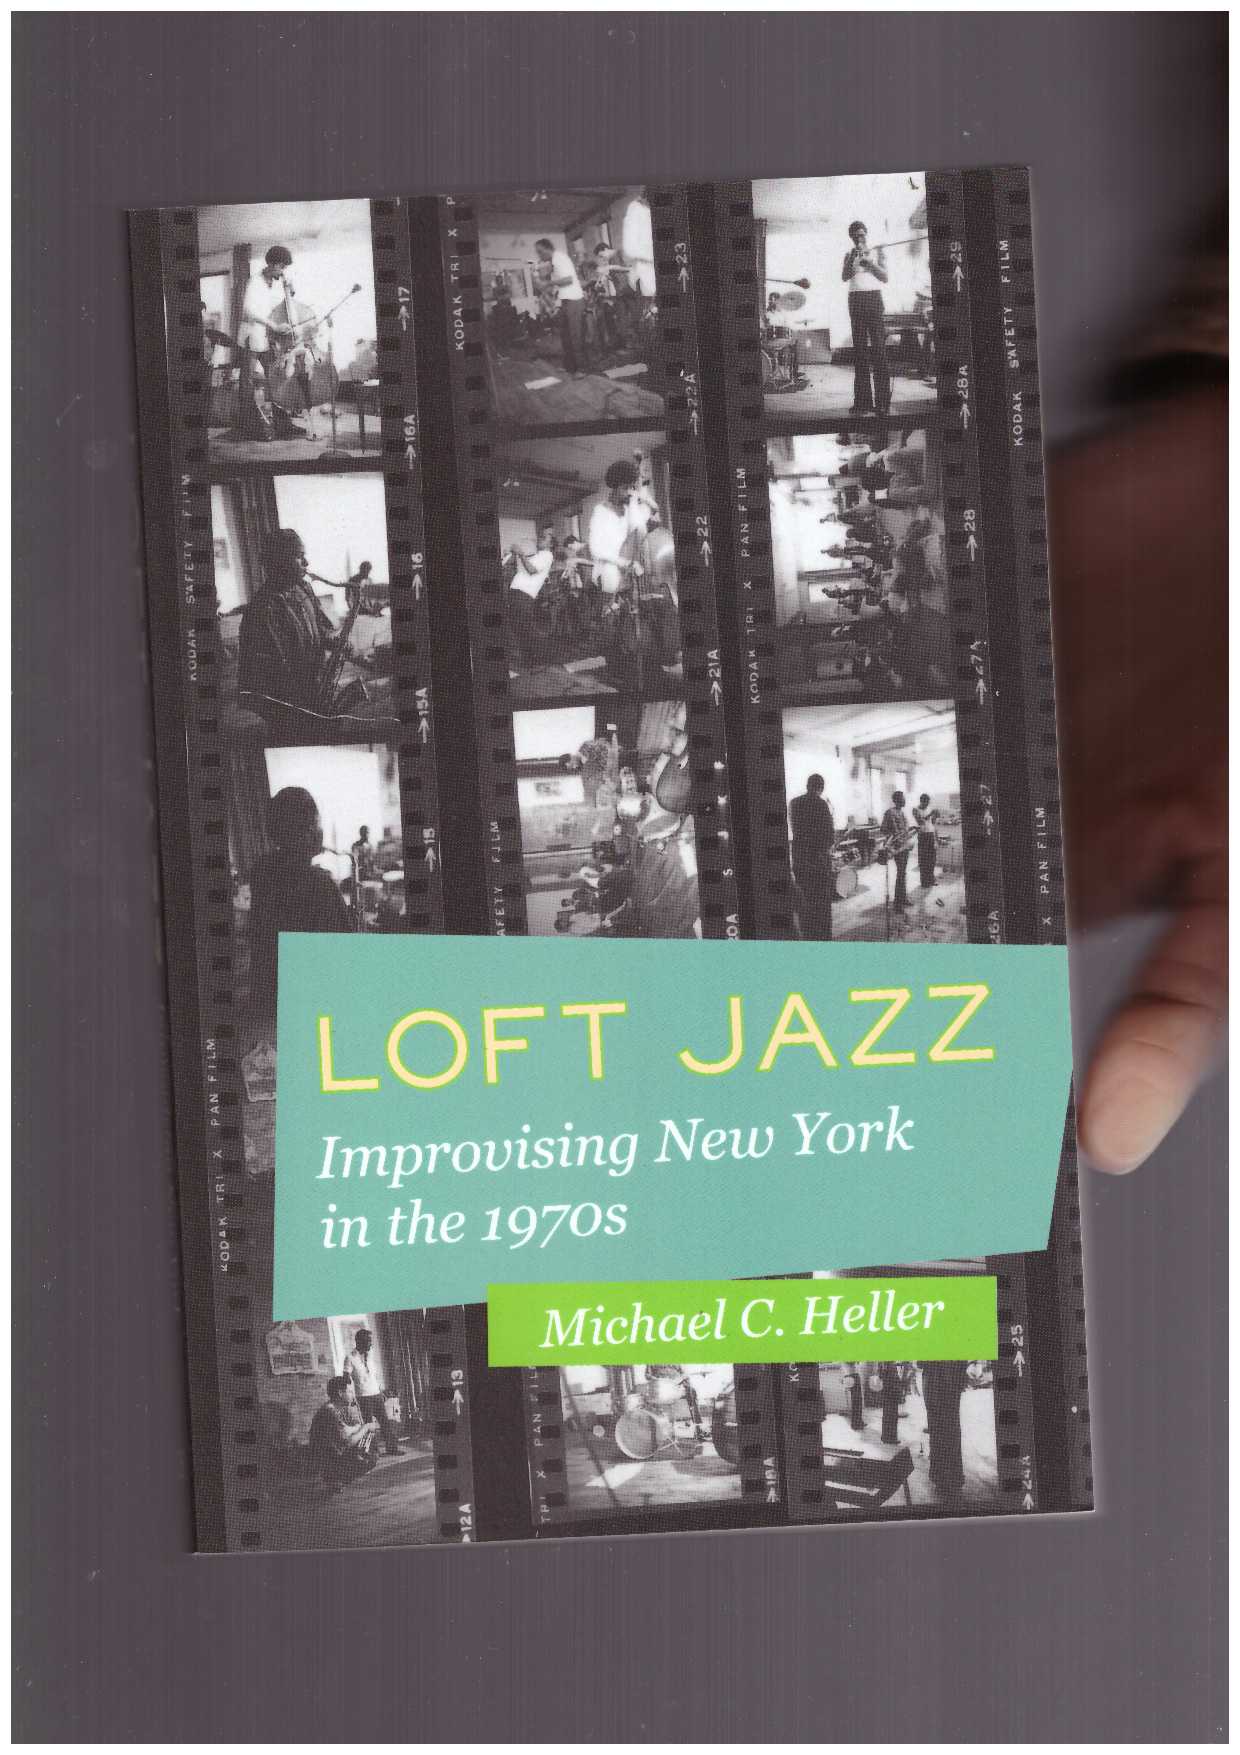 C. HELLER, Michael  - Loft Jazz. Improvising New York in the 1970s